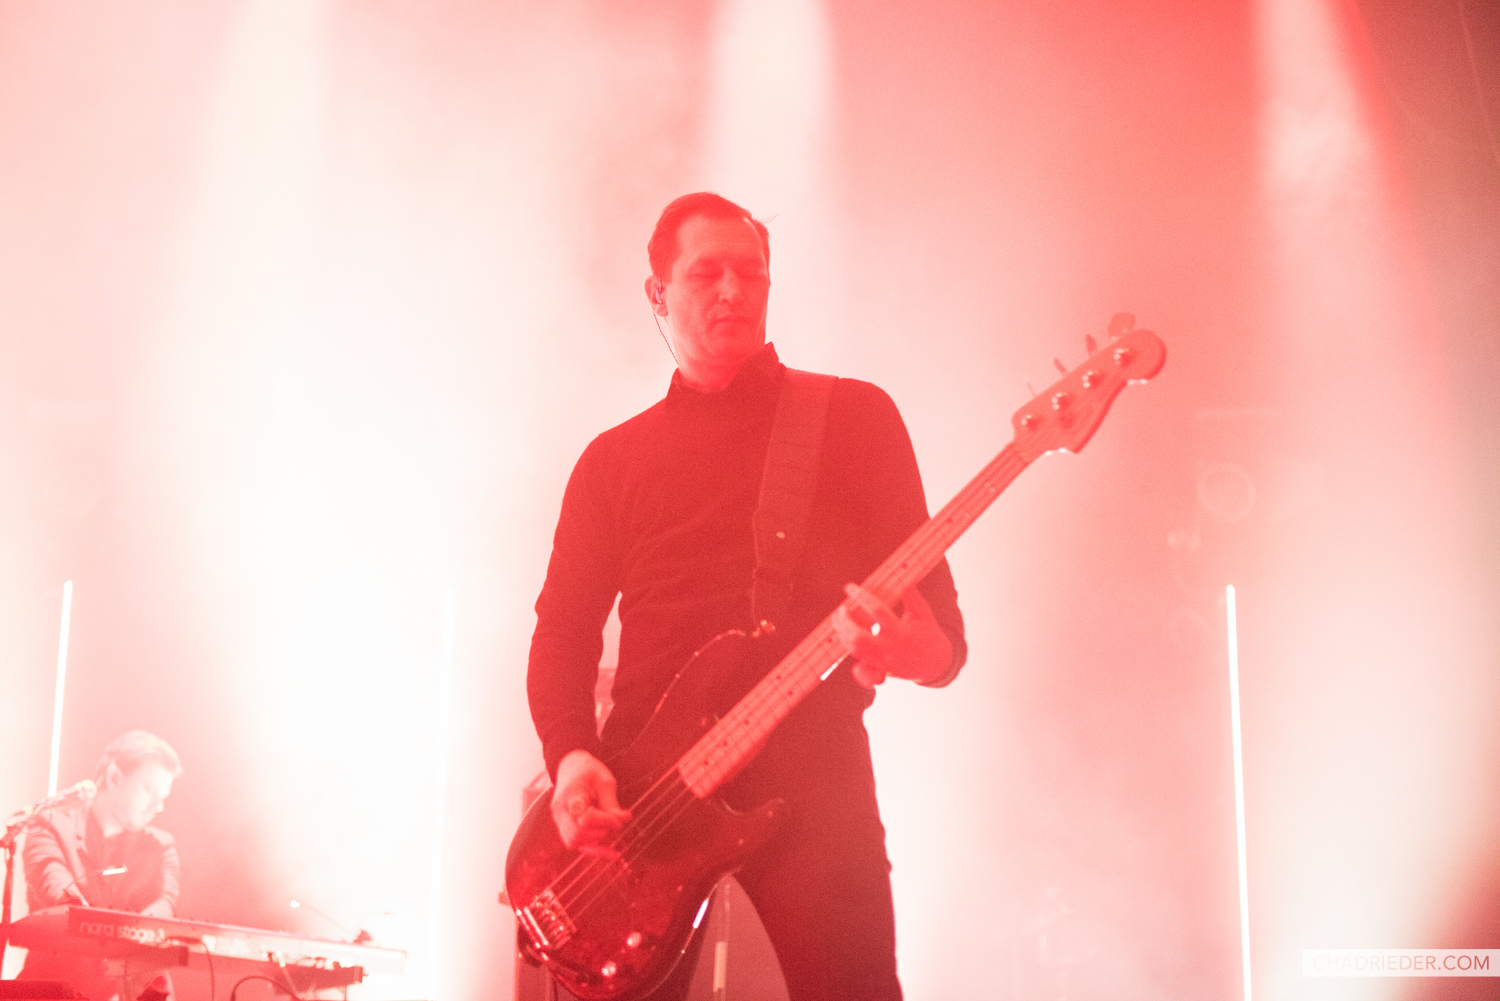 Interpol bassist